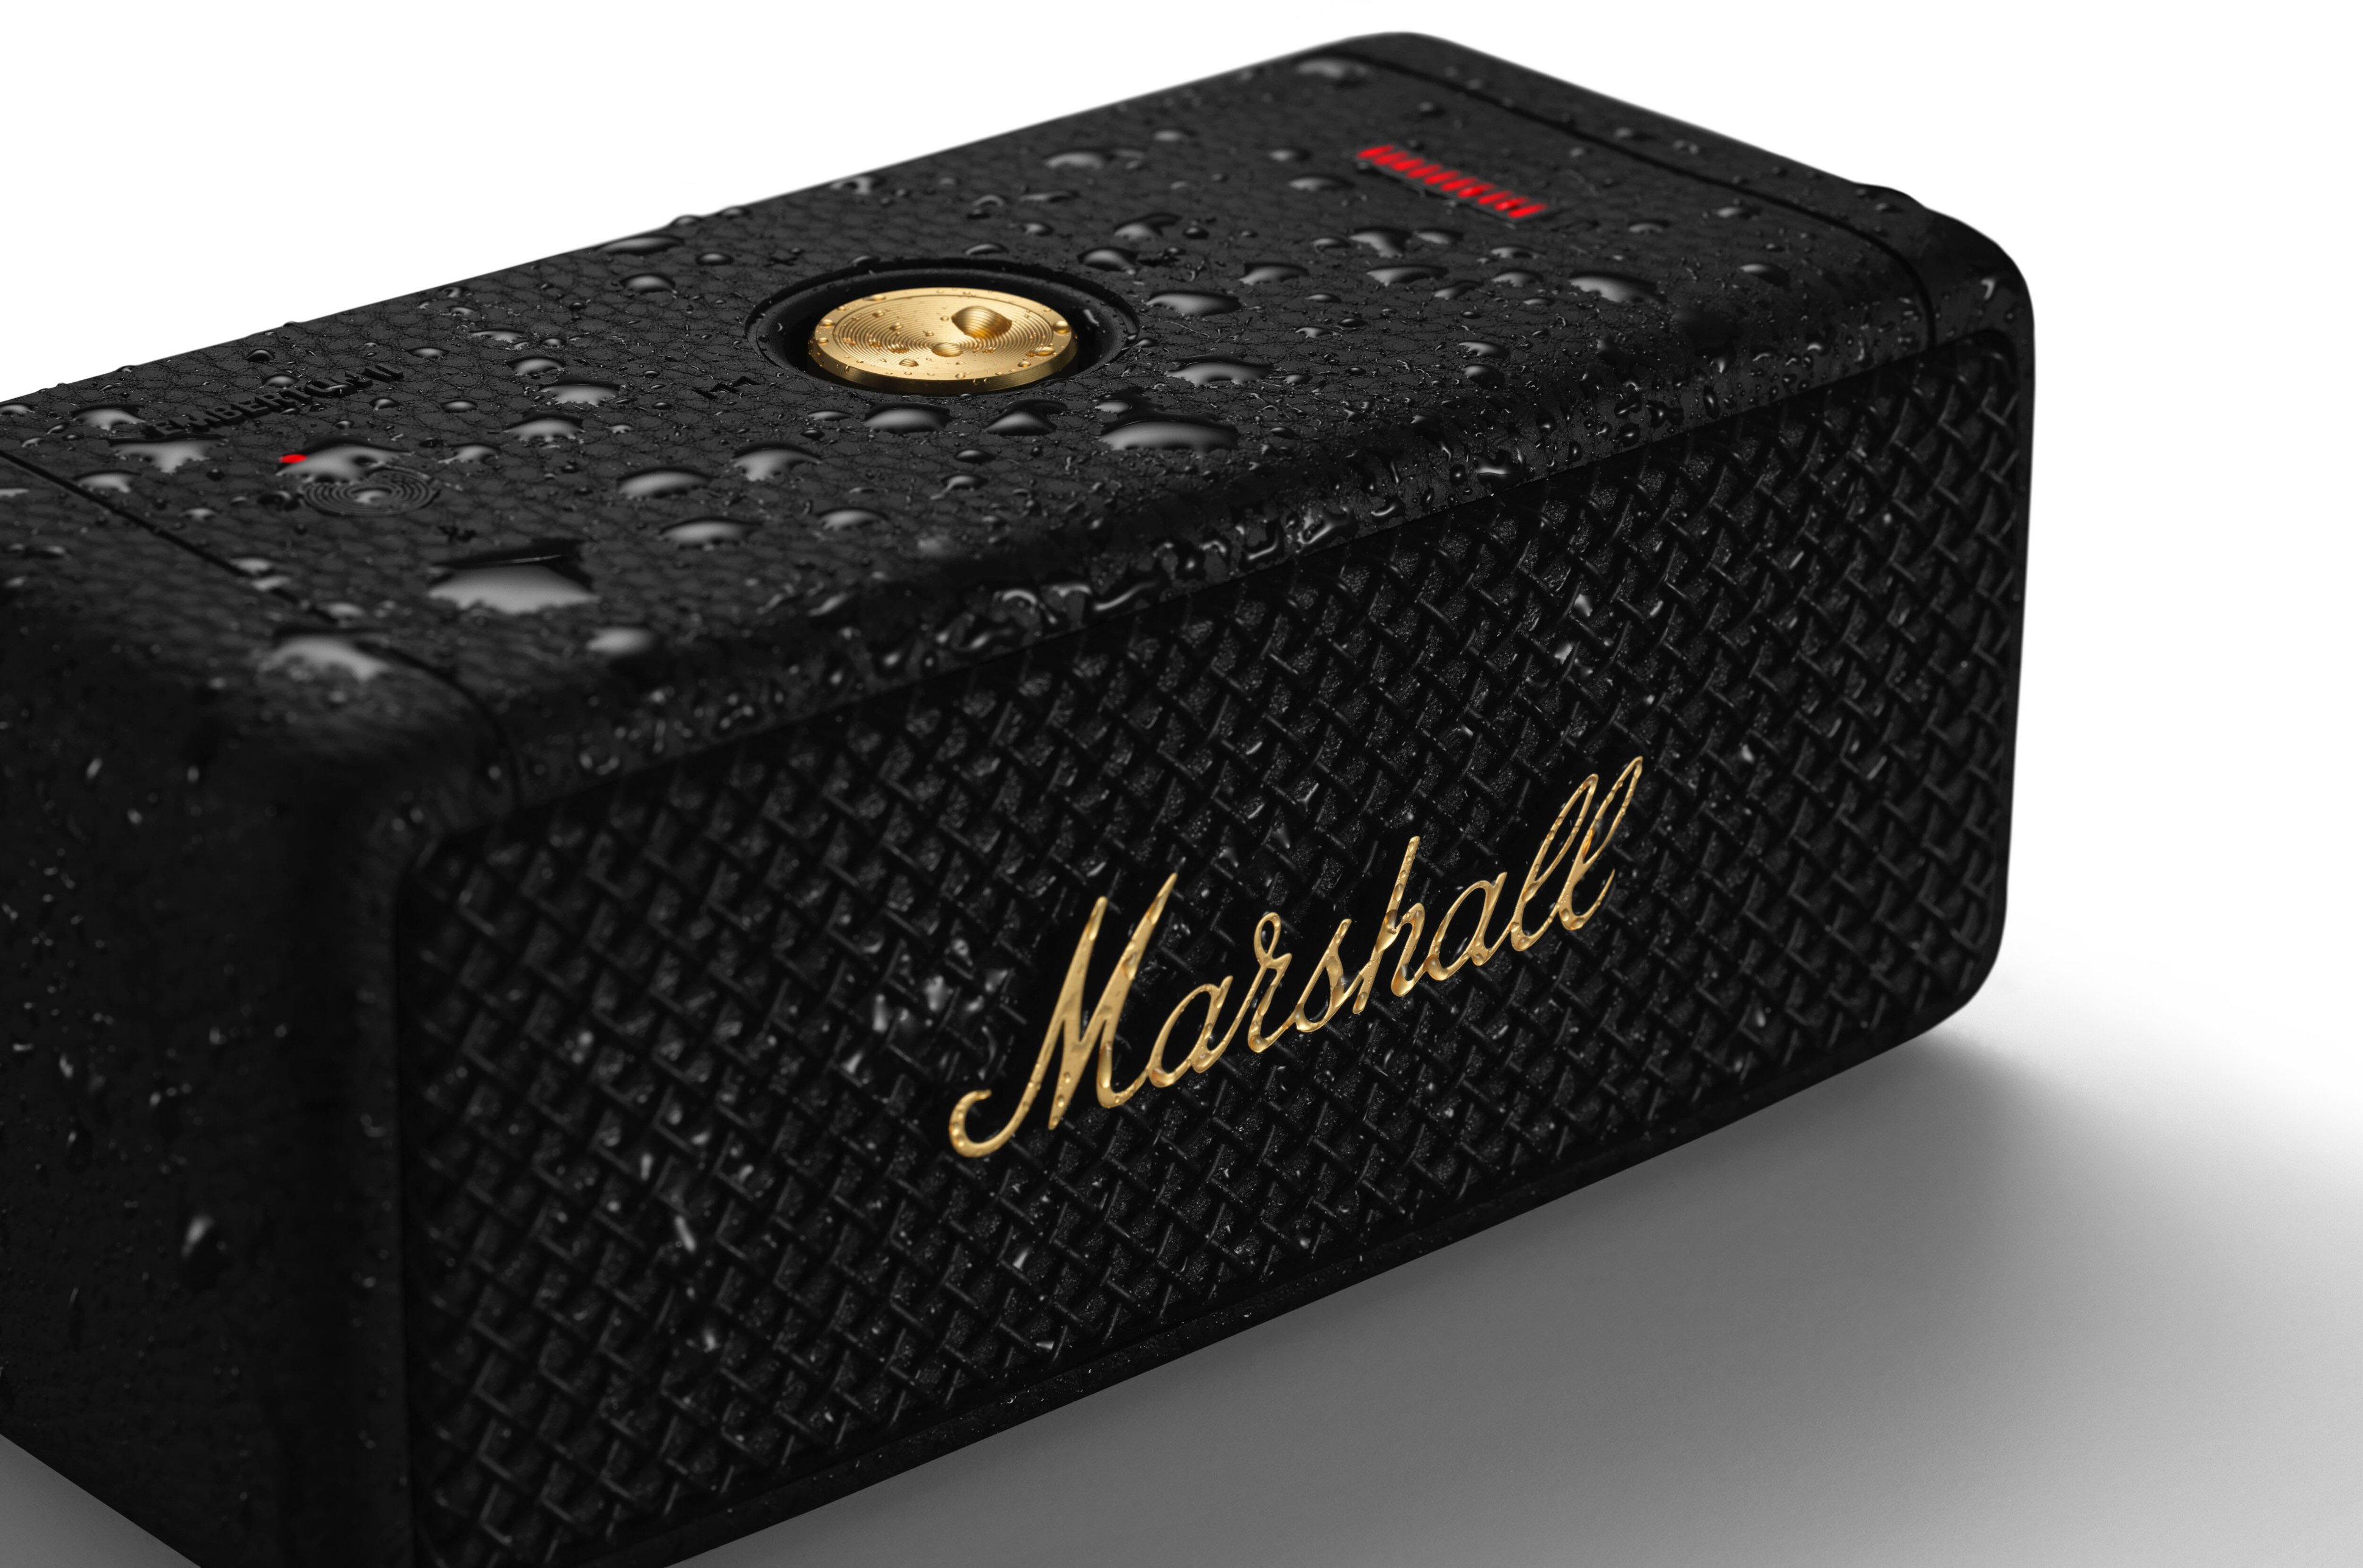 Marshall - Emberton Portable Bluetooth Speaker - Black & Brass